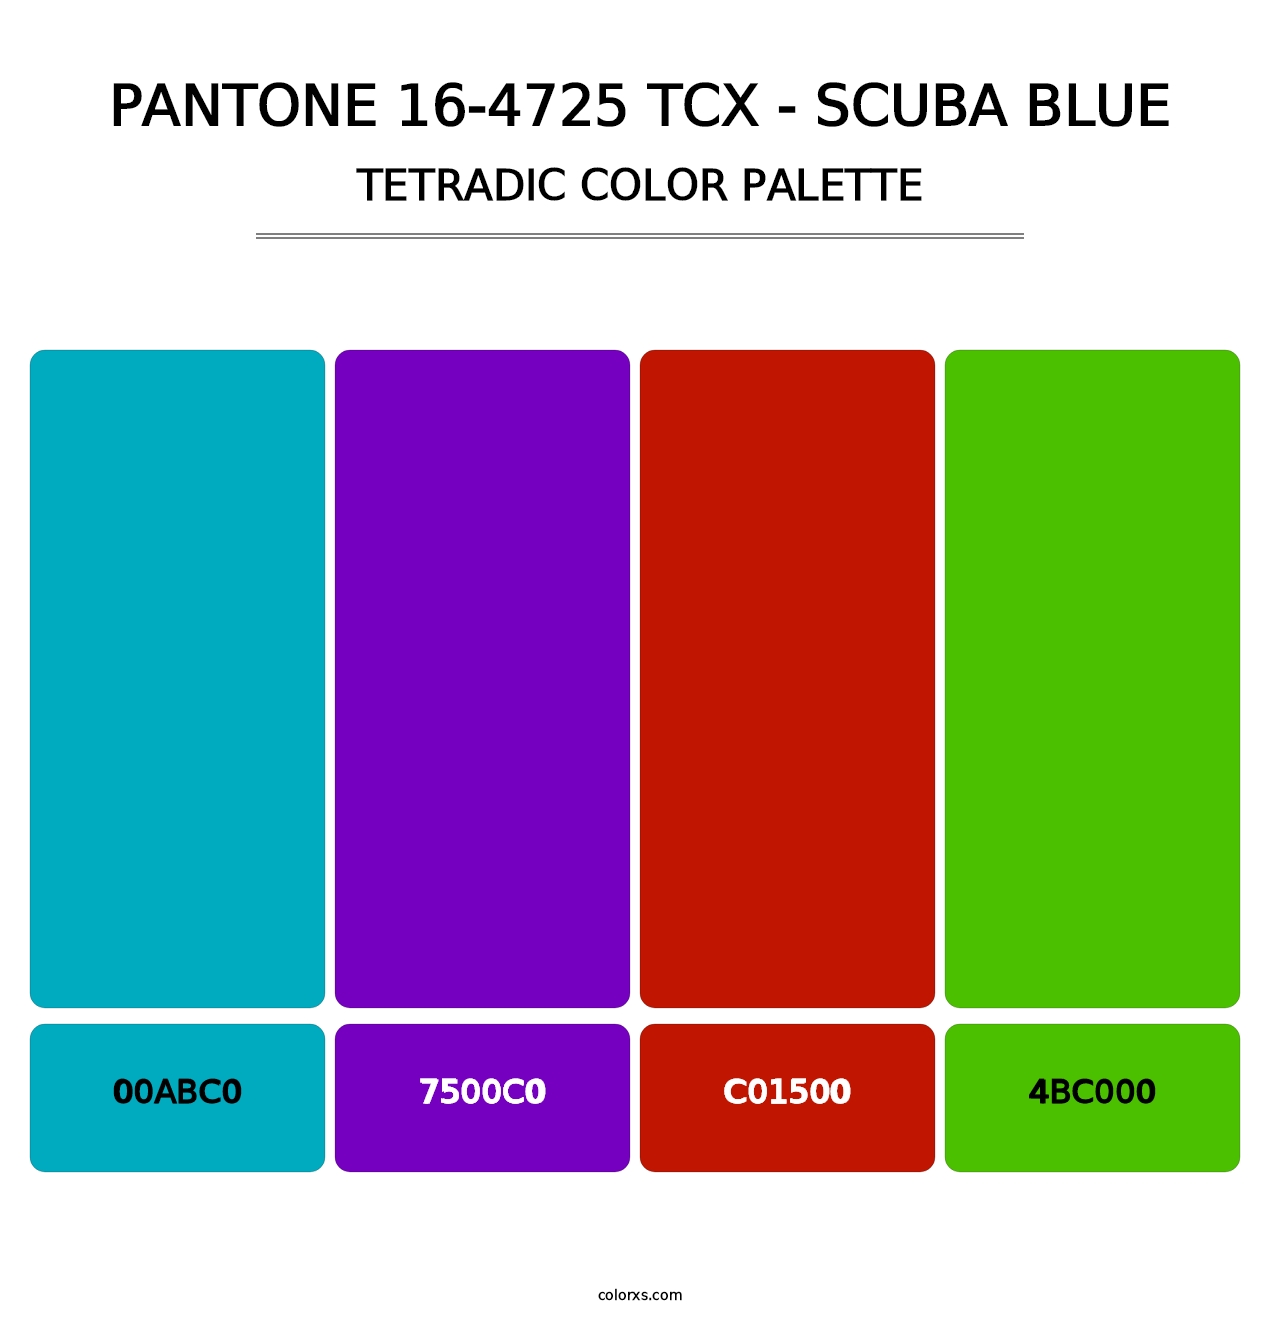 PANTONE 16-4725 TCX - Scuba Blue - Tetradic Color Palette